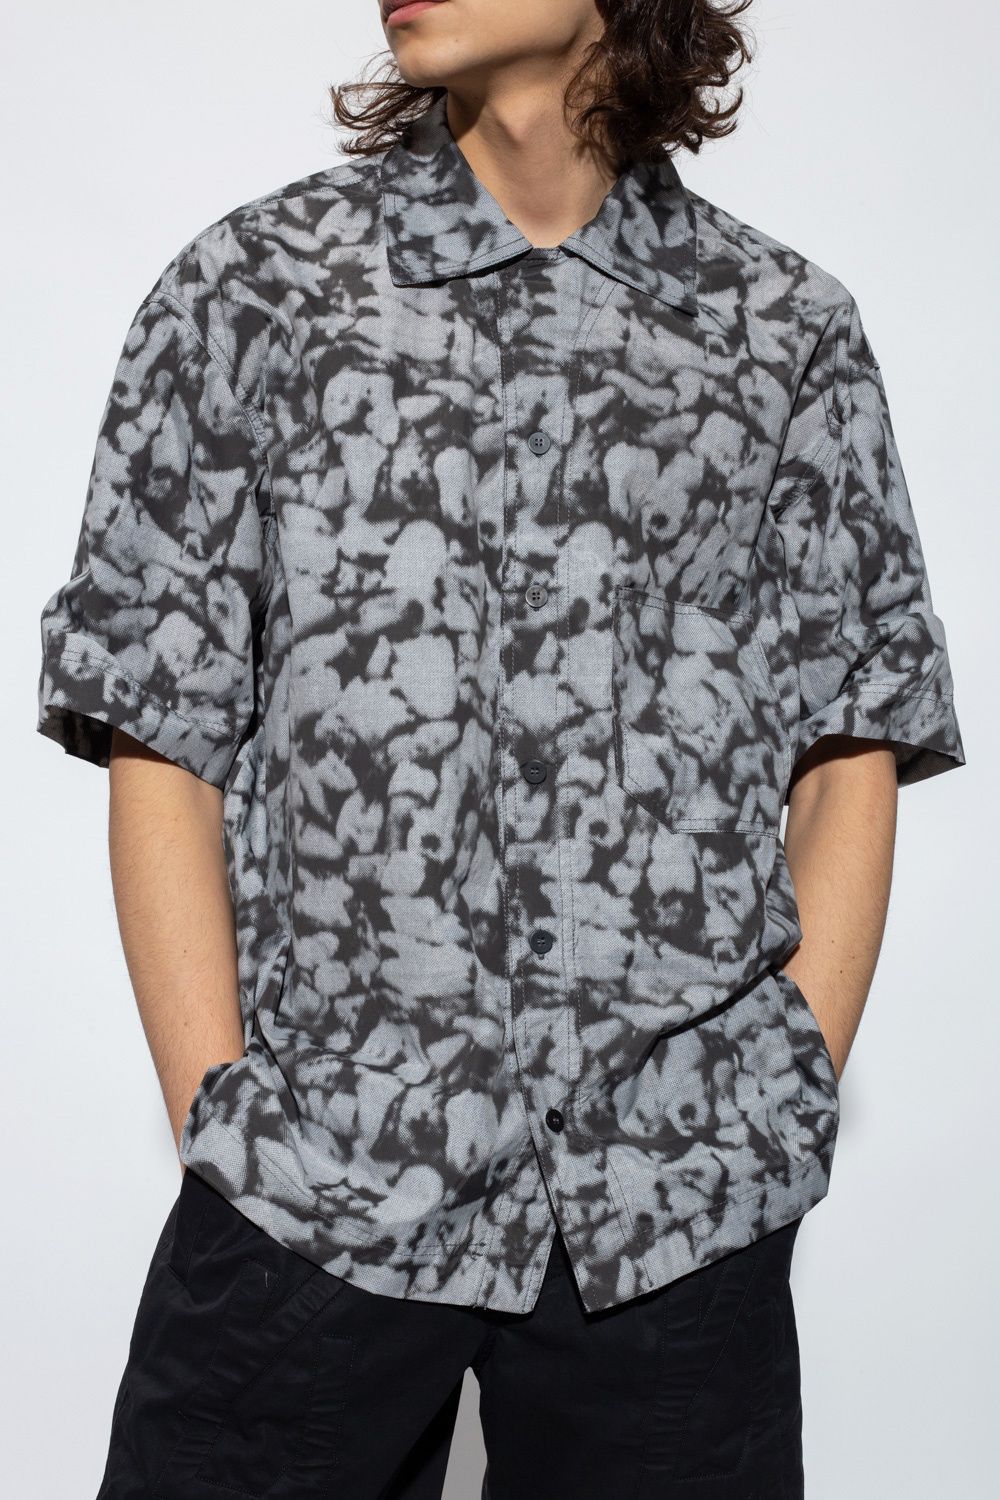 44 Label Group A BATHING APE® camouflage shark print cotton T-shirt